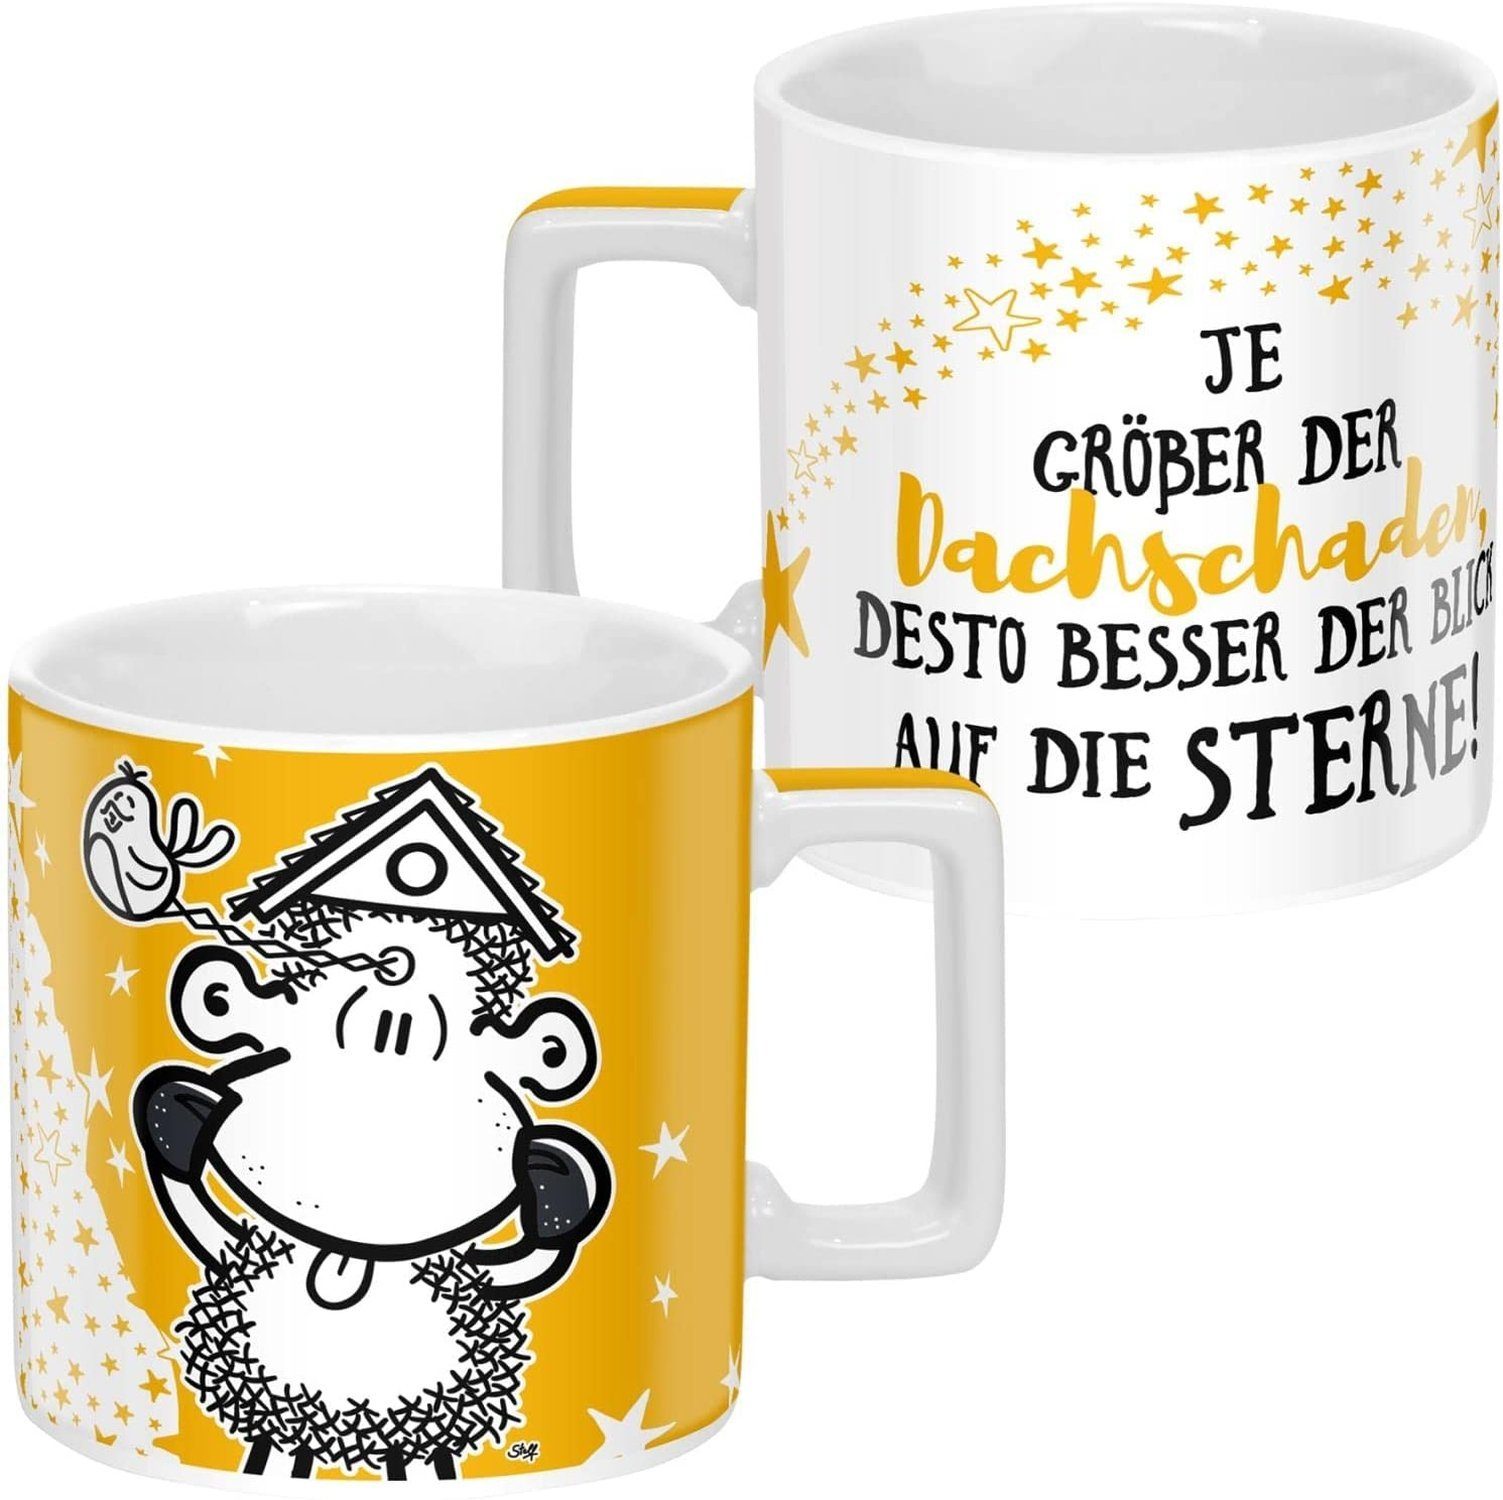 Sheepworld Tasse Kaffeetasse Kaffeebecher Teetasse 47768 Wortheld-Tasse Material: Sterne Porzellan Sheepworld 45cl